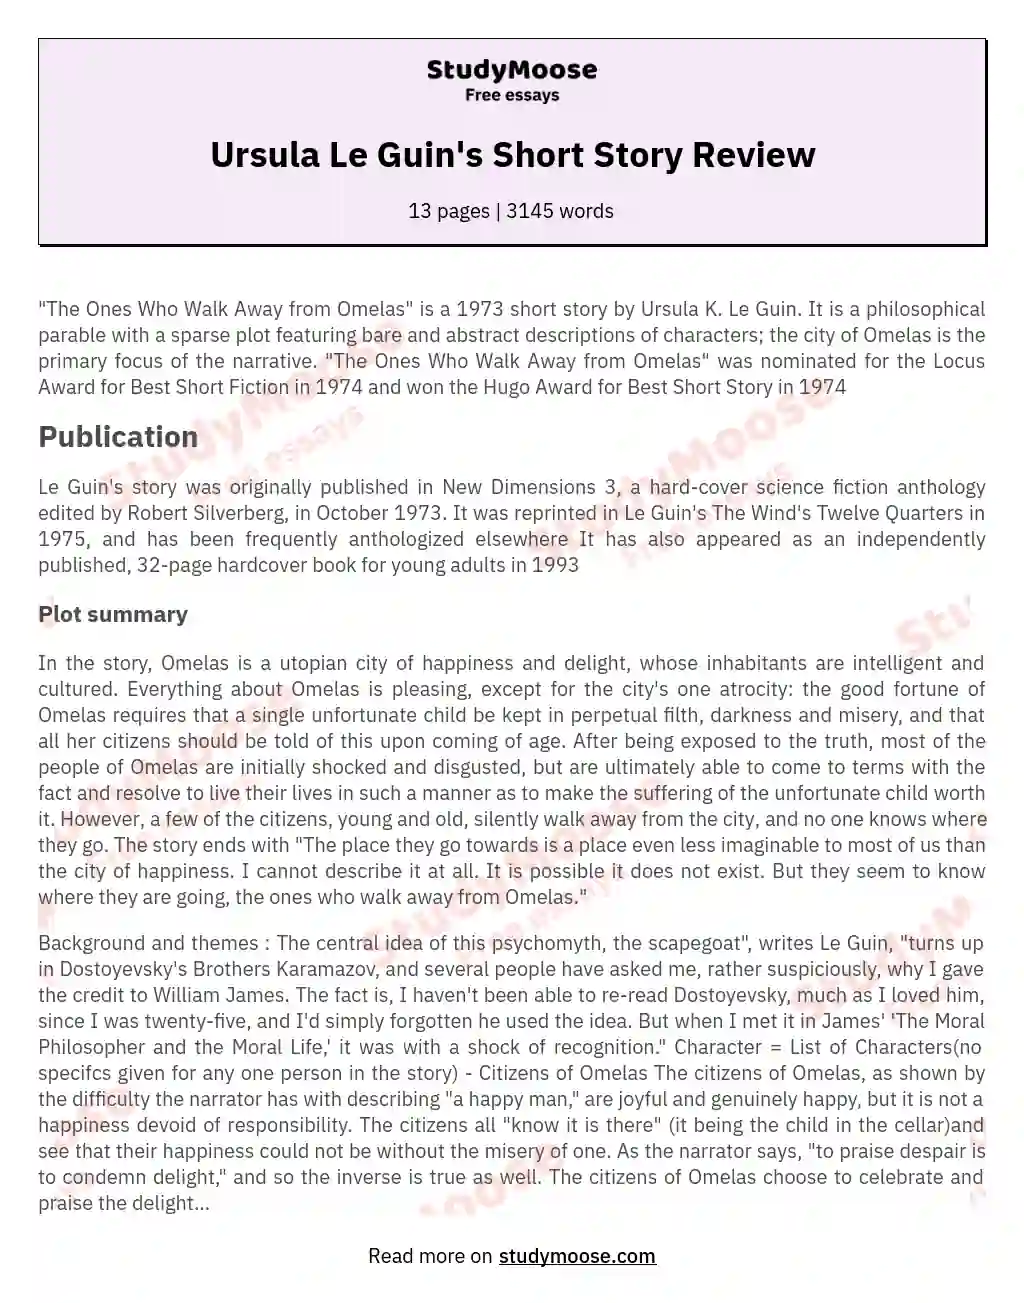 Ursula Le Guin's Short Story Review essay